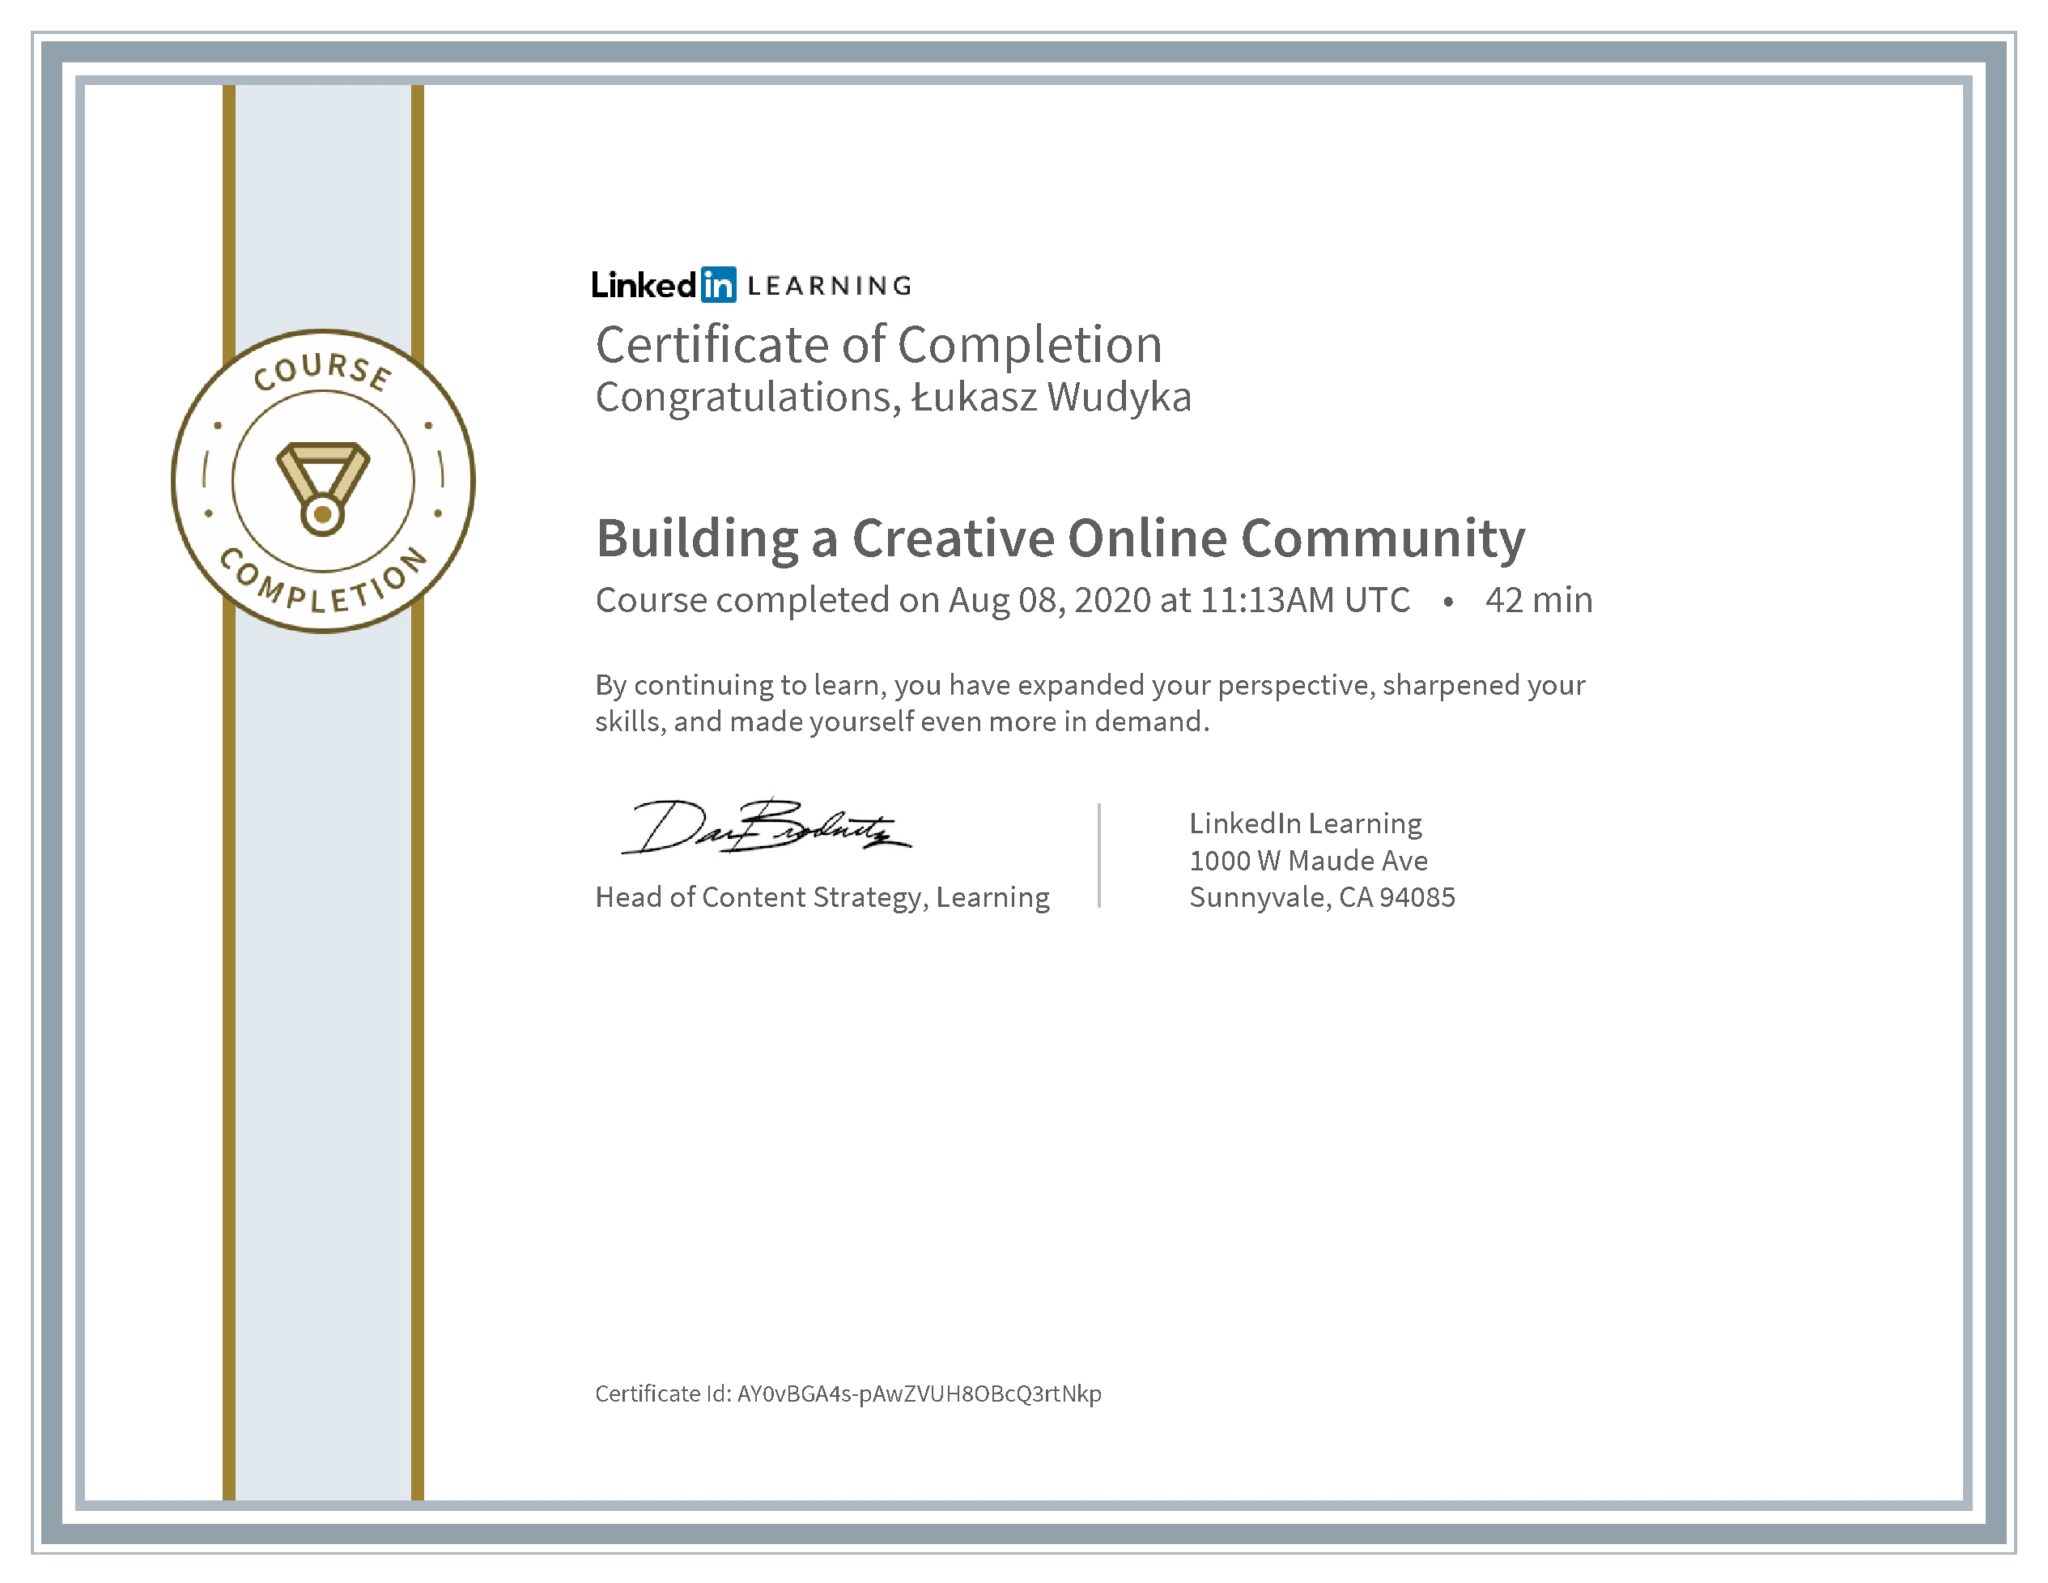 Łukasz Wudyka certyfikat LinkedIn Building a Creative Online Community